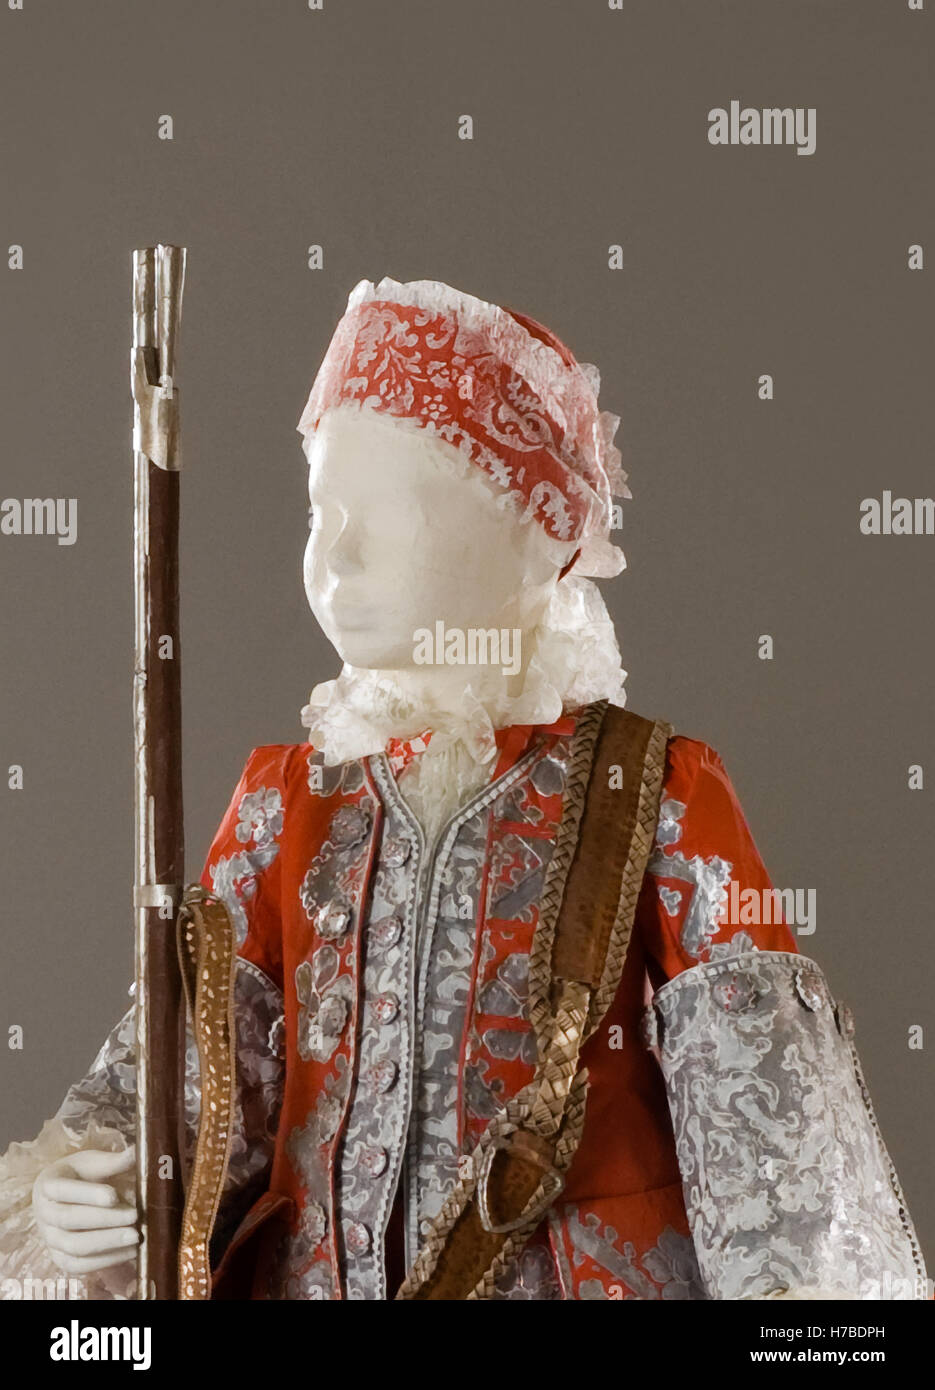 Niño en traje de caza, prendas de vestir, papel de réplicas históricas por Isabelle de Borchgrave Foto de stock